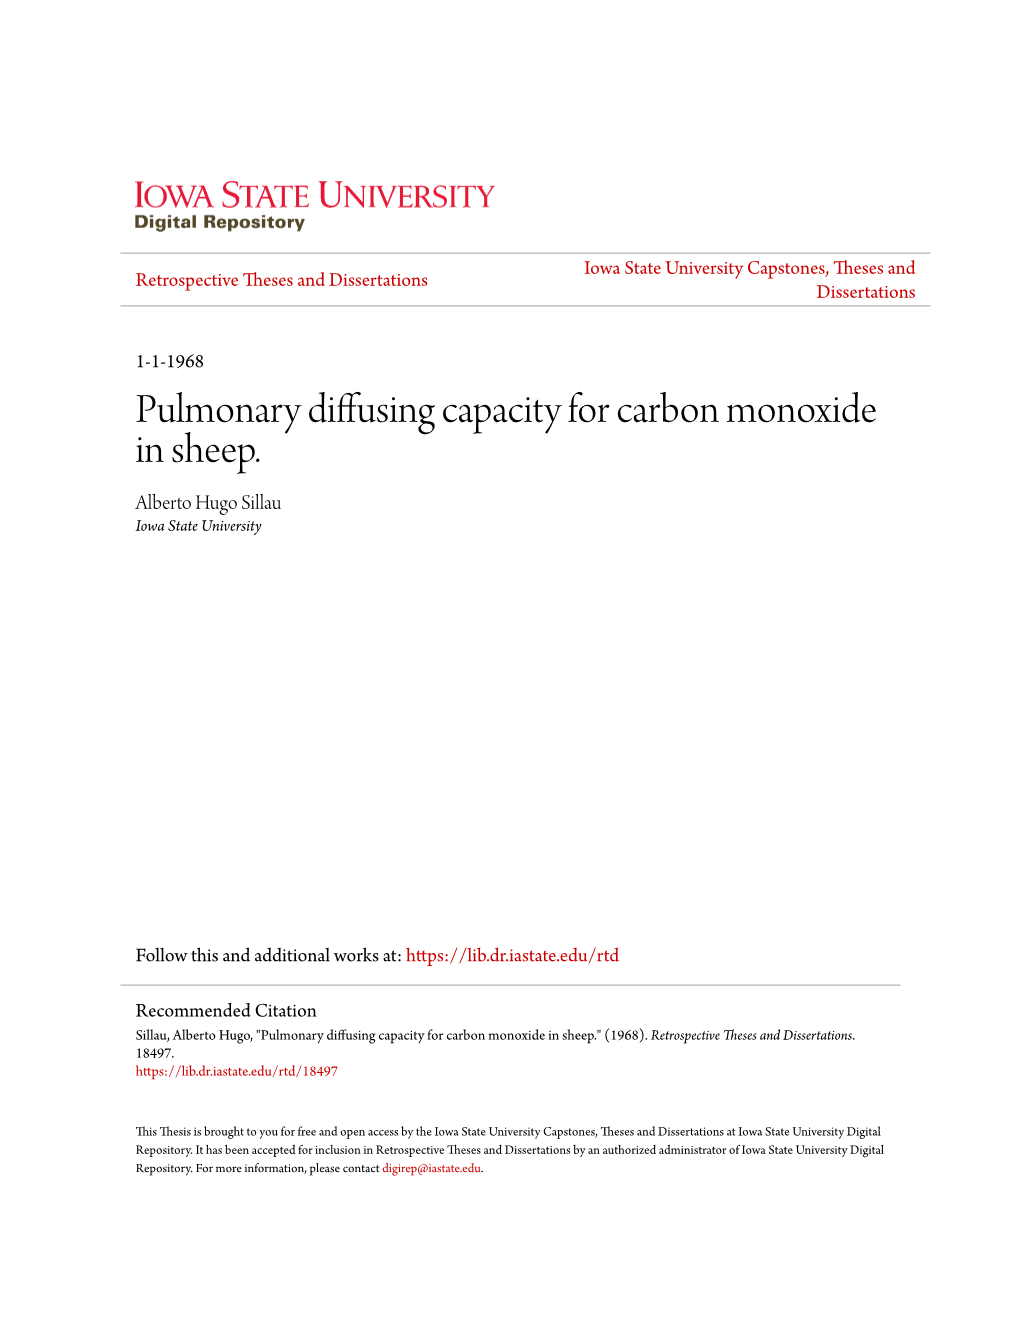 Pulmonary Diffusing Capacity for Carbon Monoxide in Sheep. Alberto Hugo Sillau Iowa State University